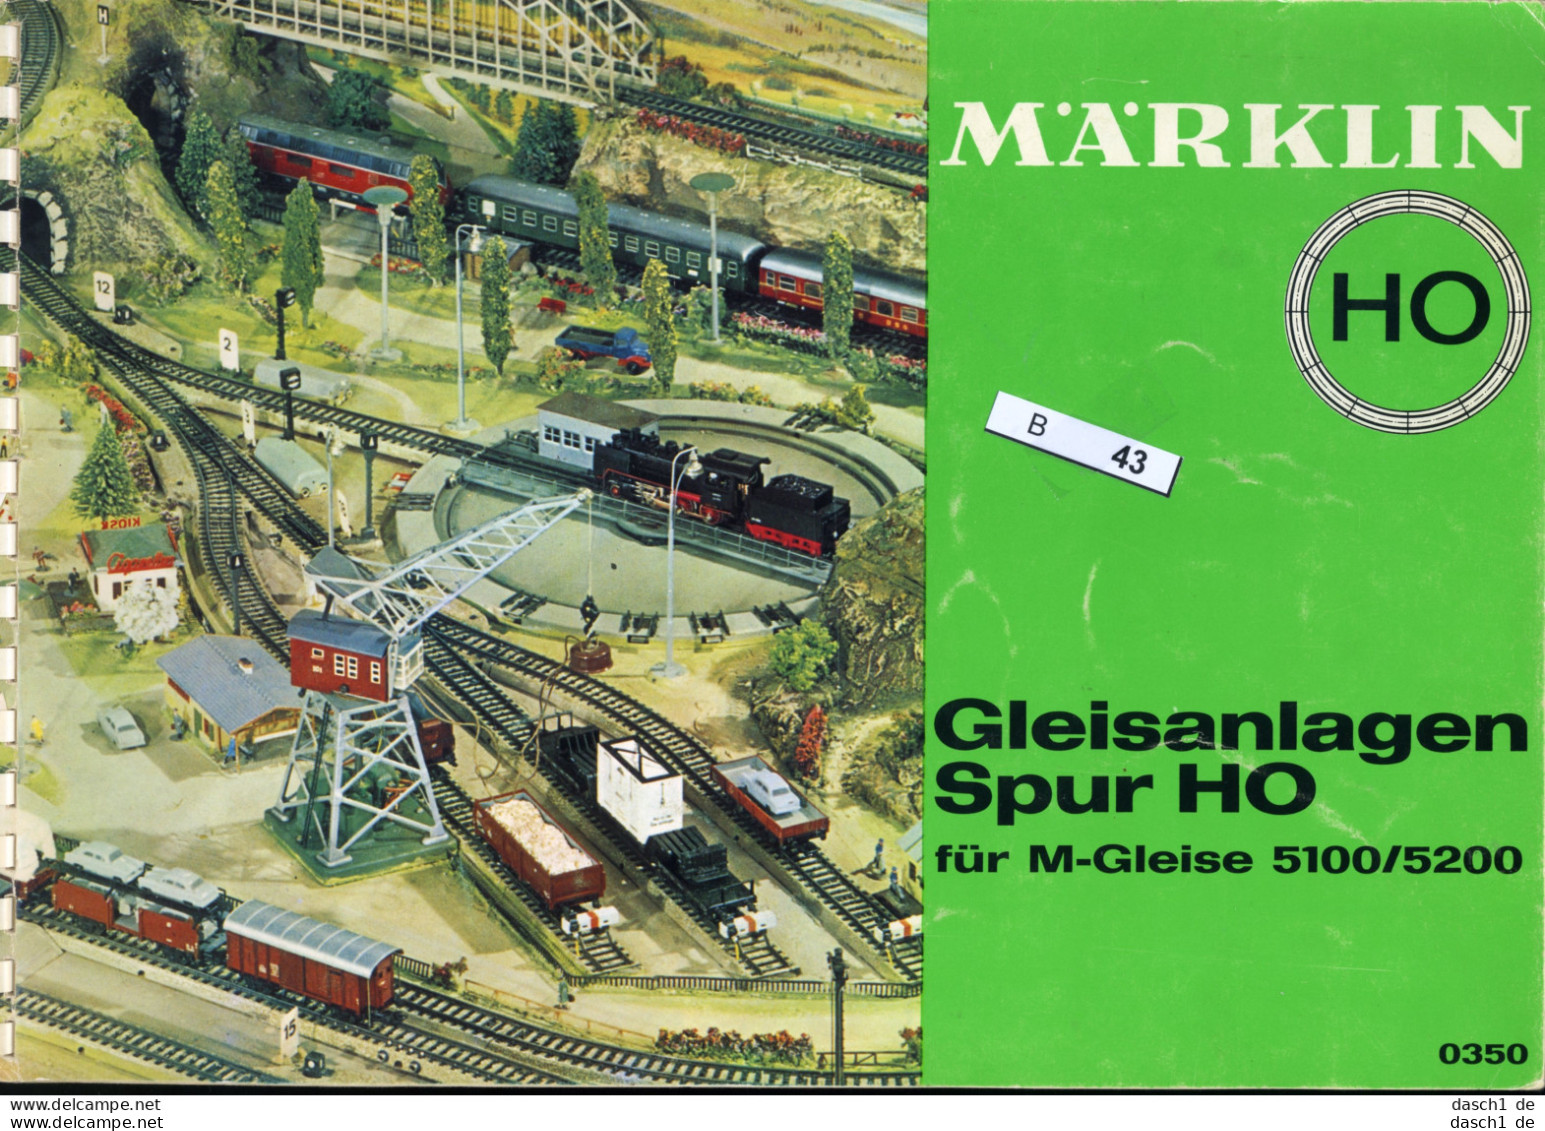 Märklin Gleisanlagen Spur H0, B-043 - Toys & Miniatures